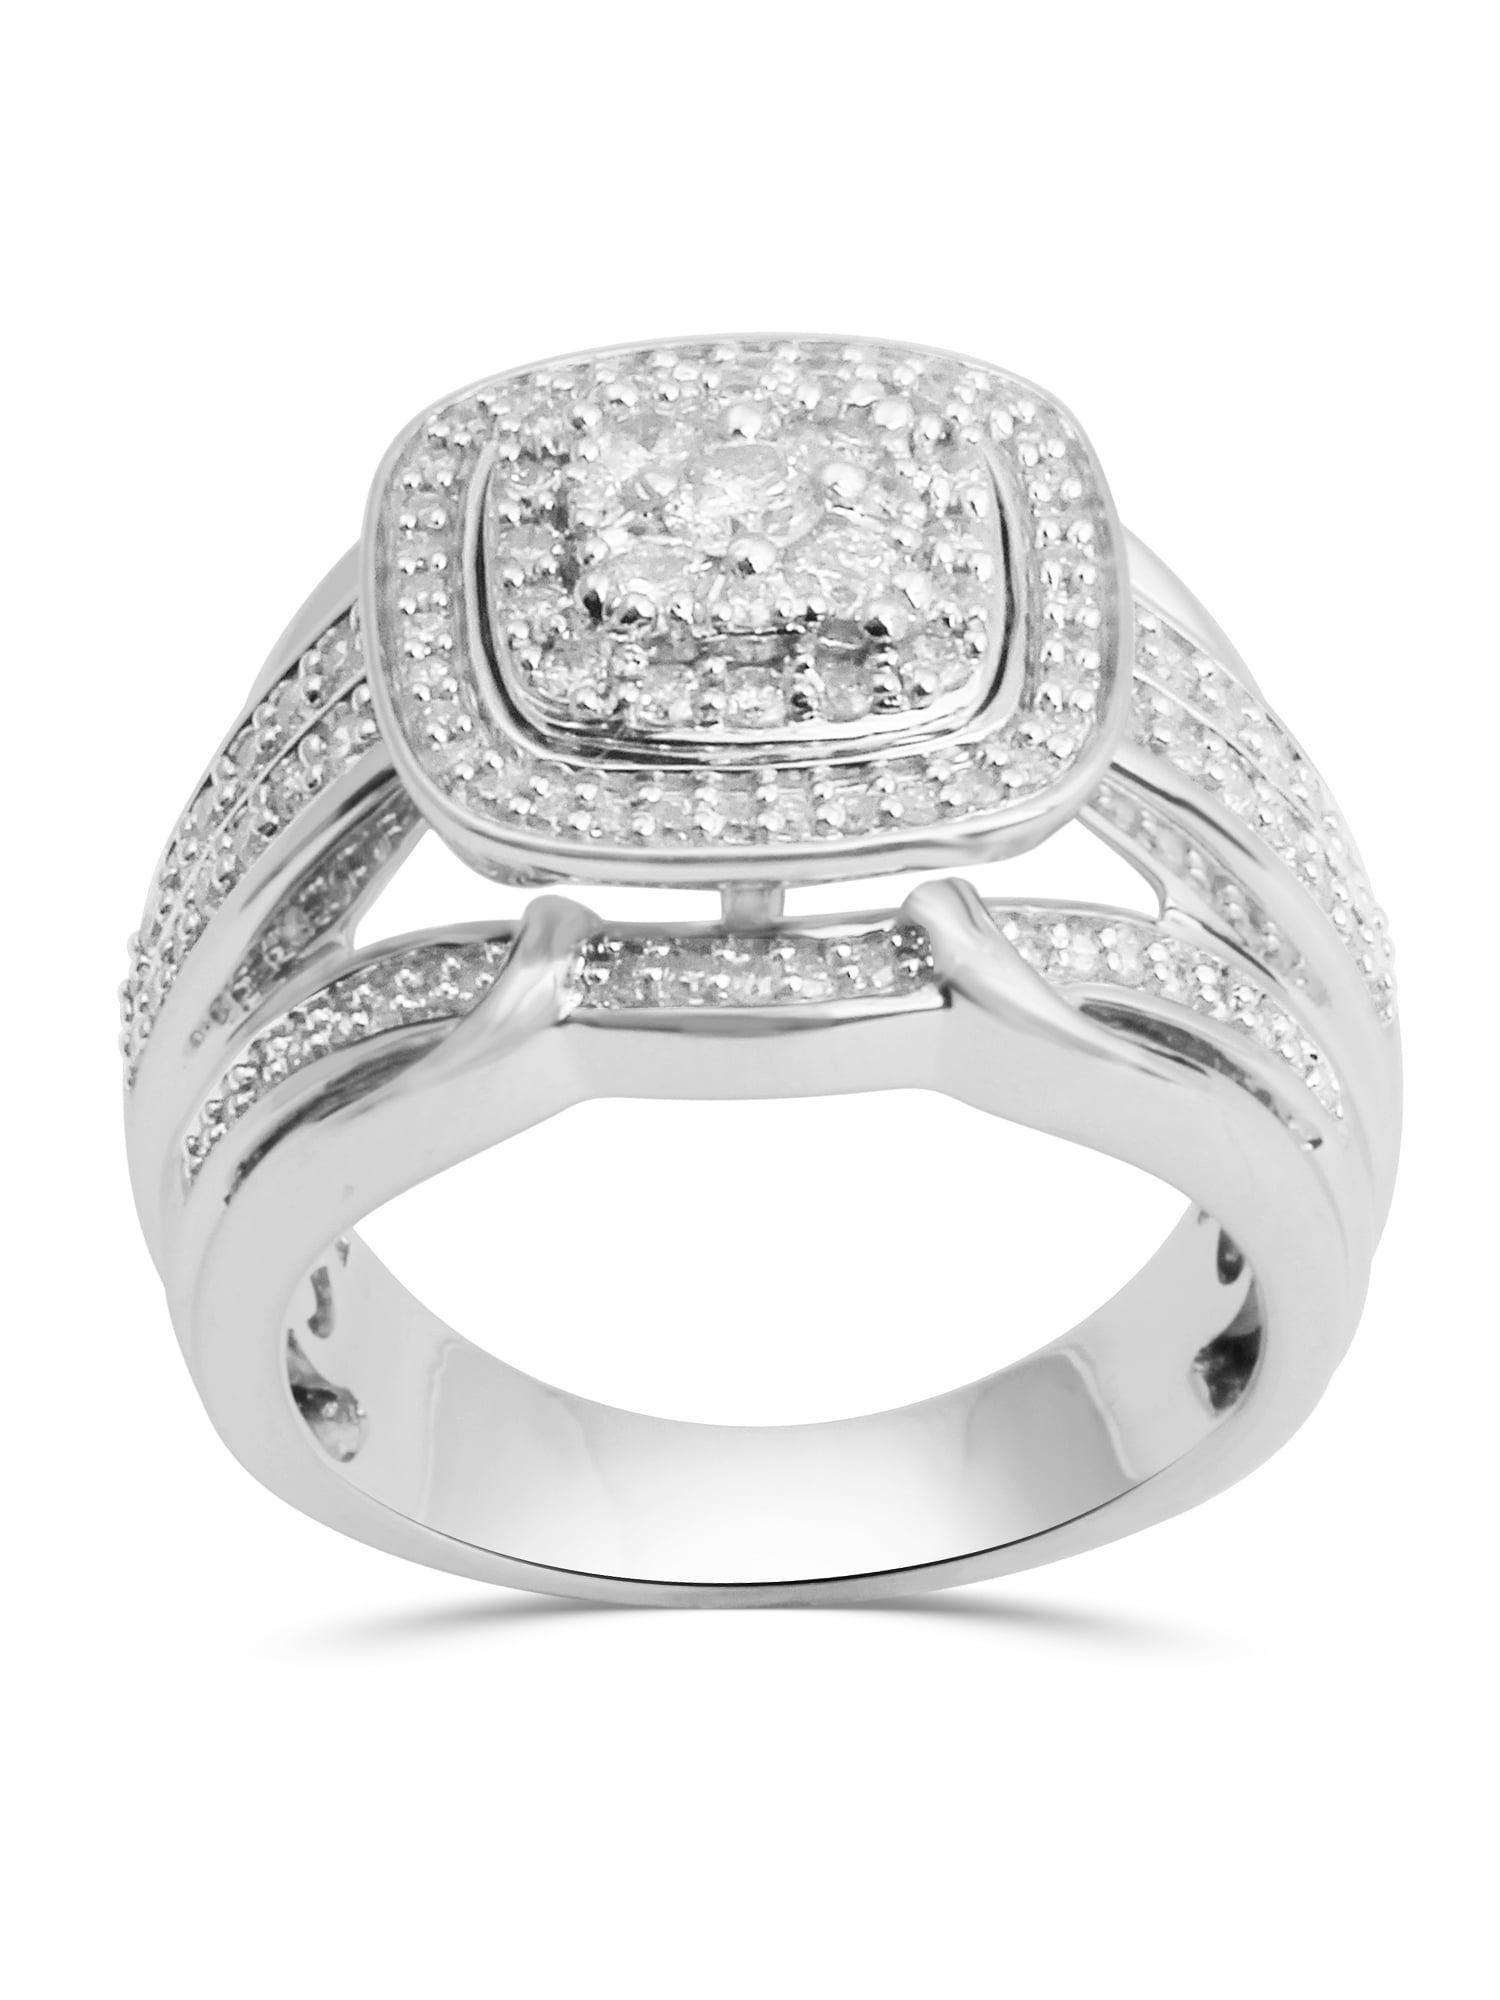 1.00 Carat T.W. Diamond Sterling Silver Anniversary Ring - Walmart.com